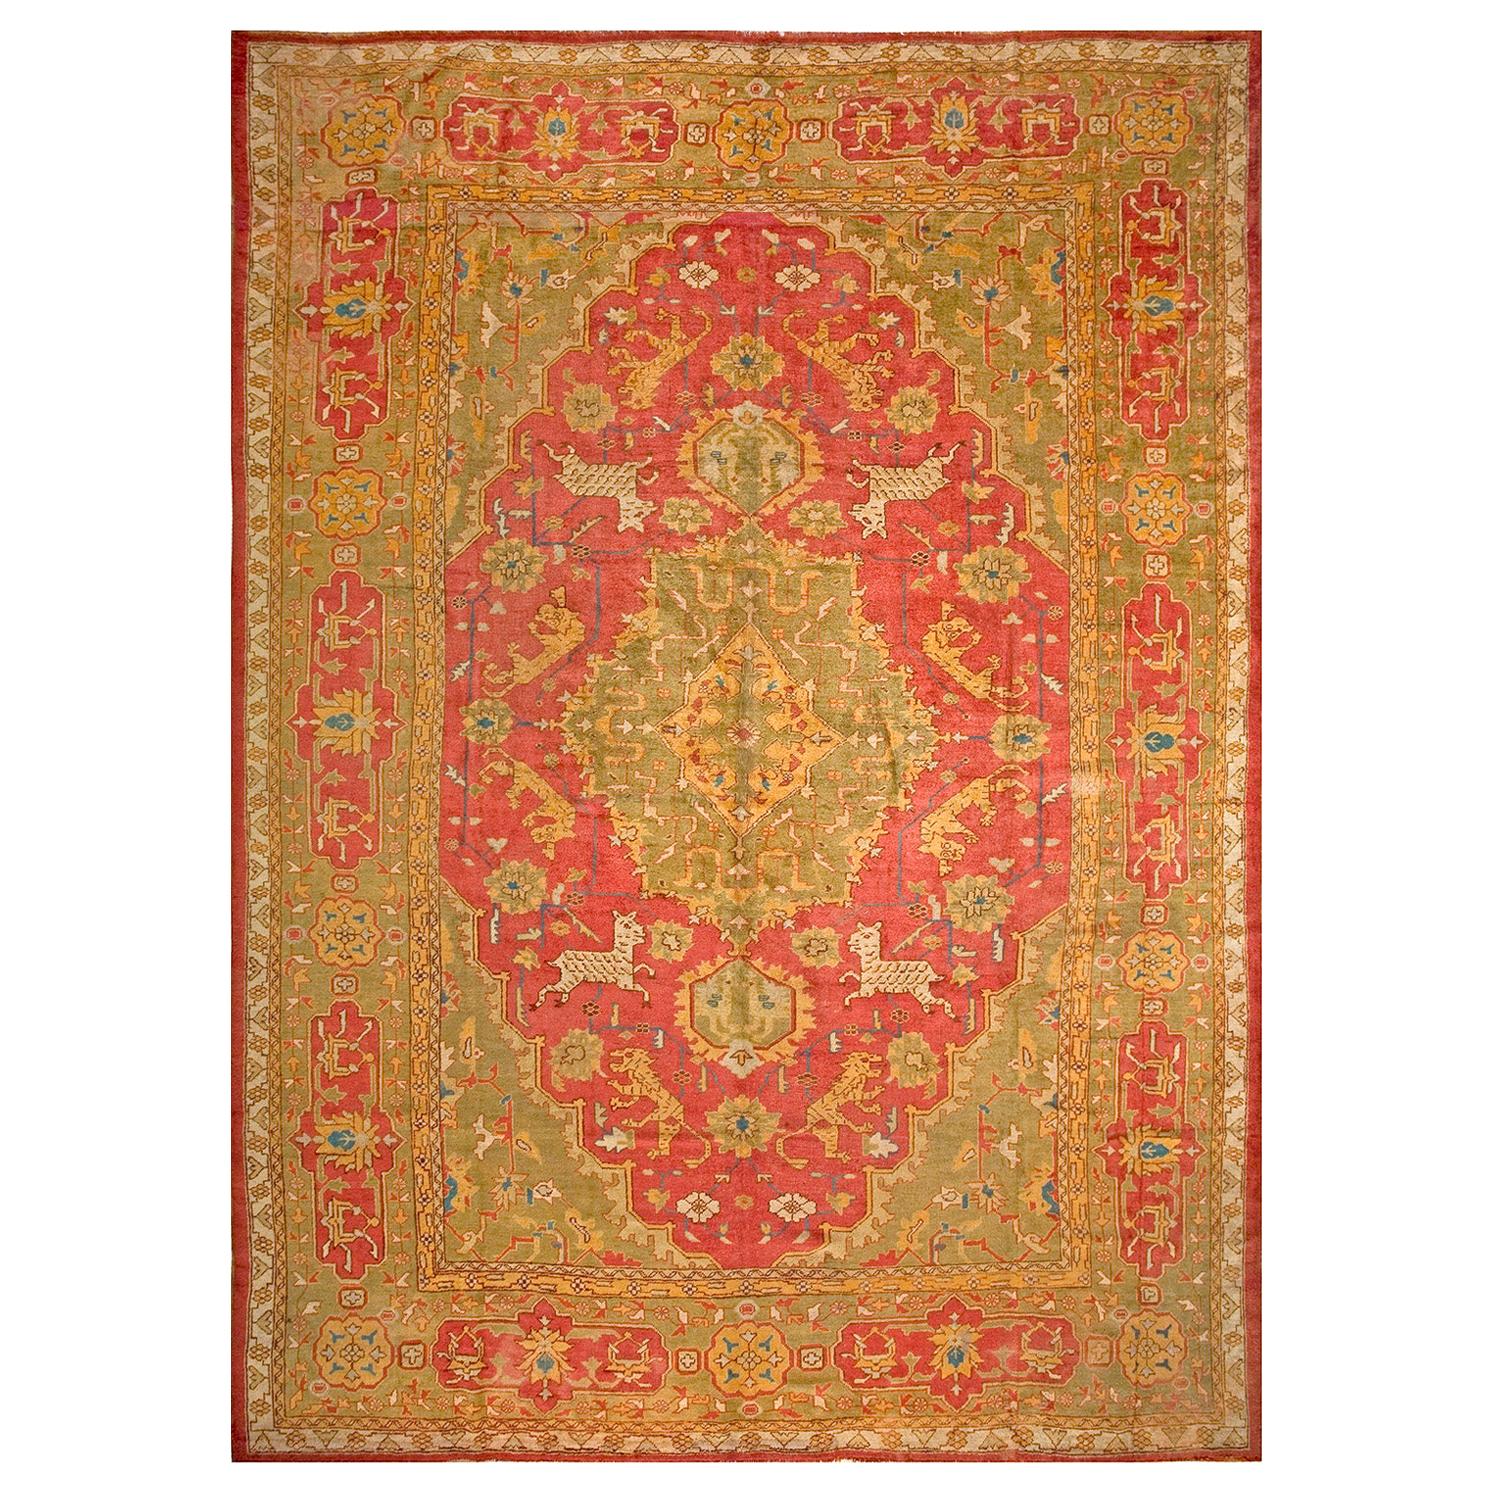 Late 19th Century Turkish Oushak Carpet ( 11'8" x 16'3" - 356 x 495 ) For Sale